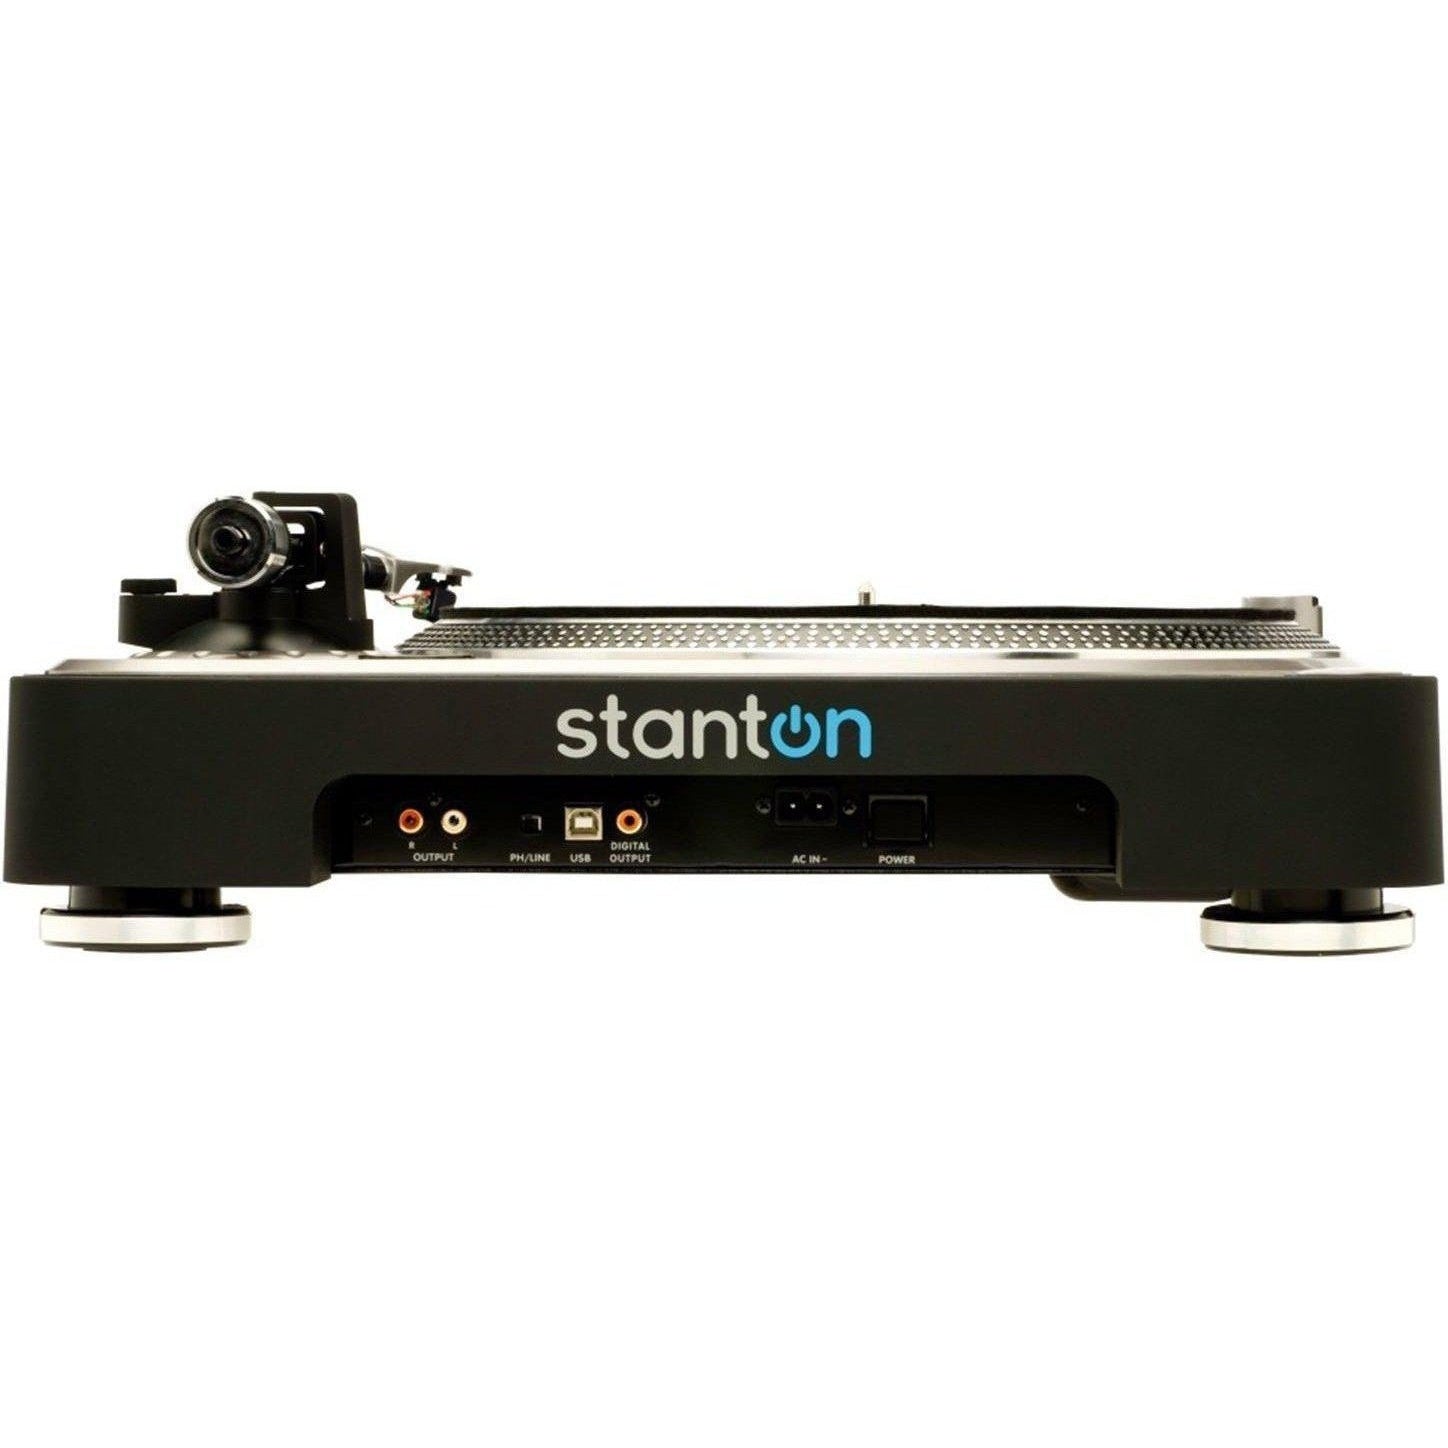 Stanton T.92 USB – The Little MIDI Store